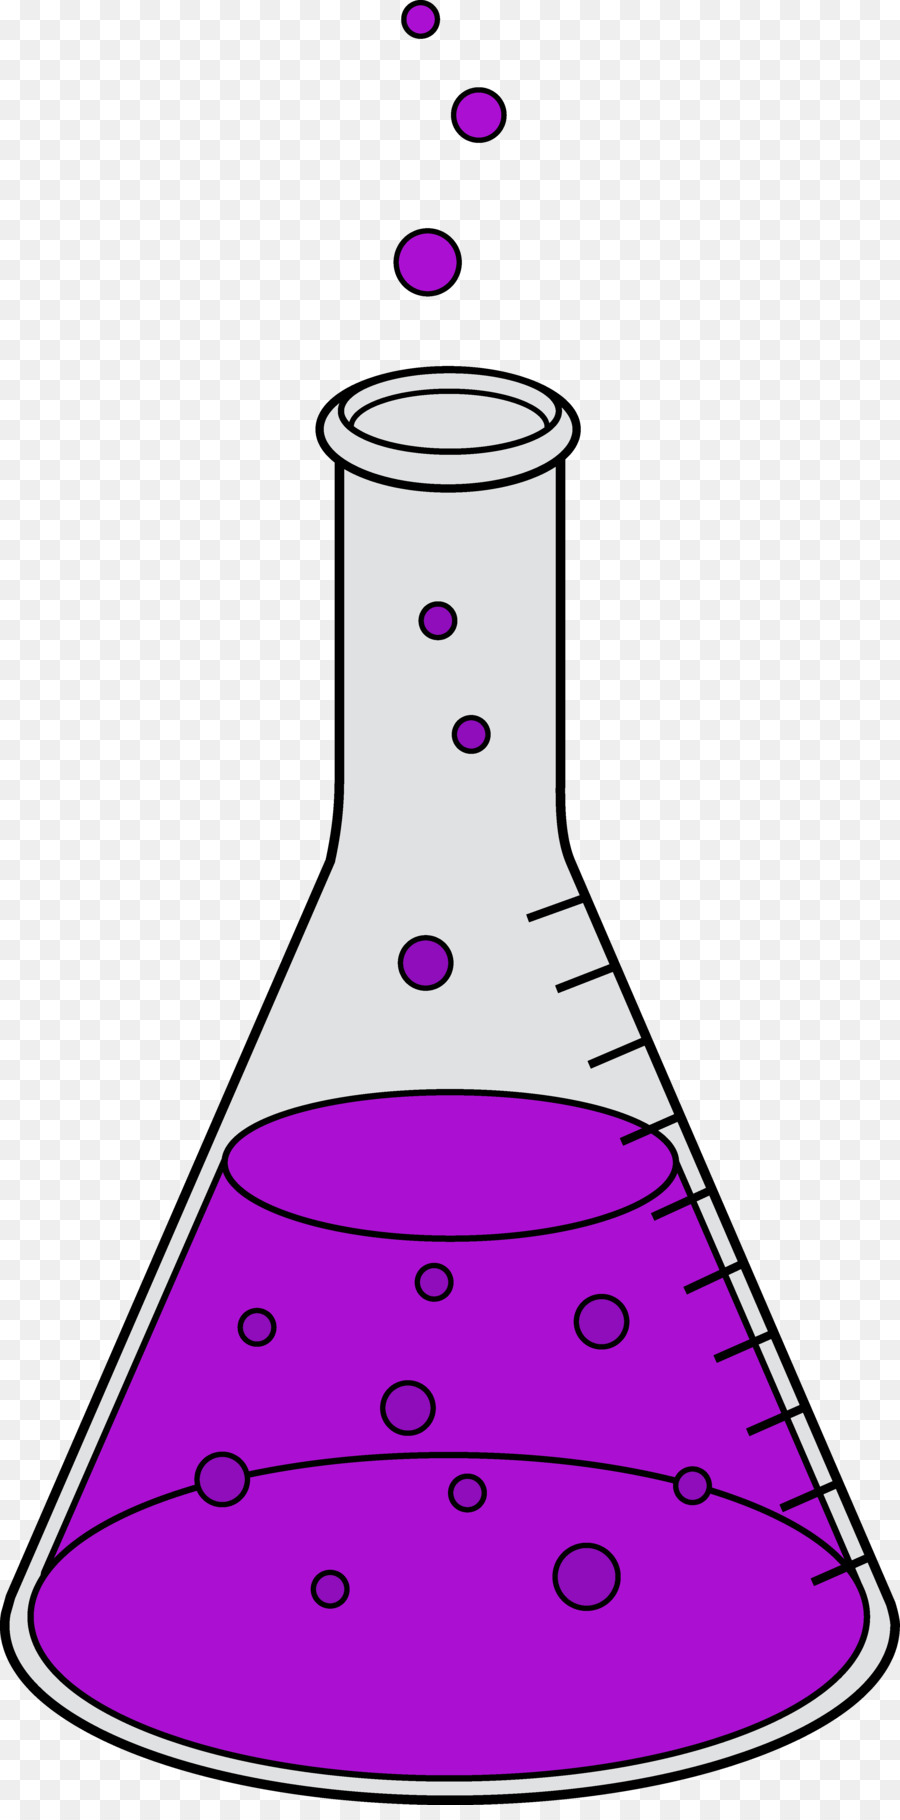 Beaker clipart clip art. Laboratory flask science experimenting